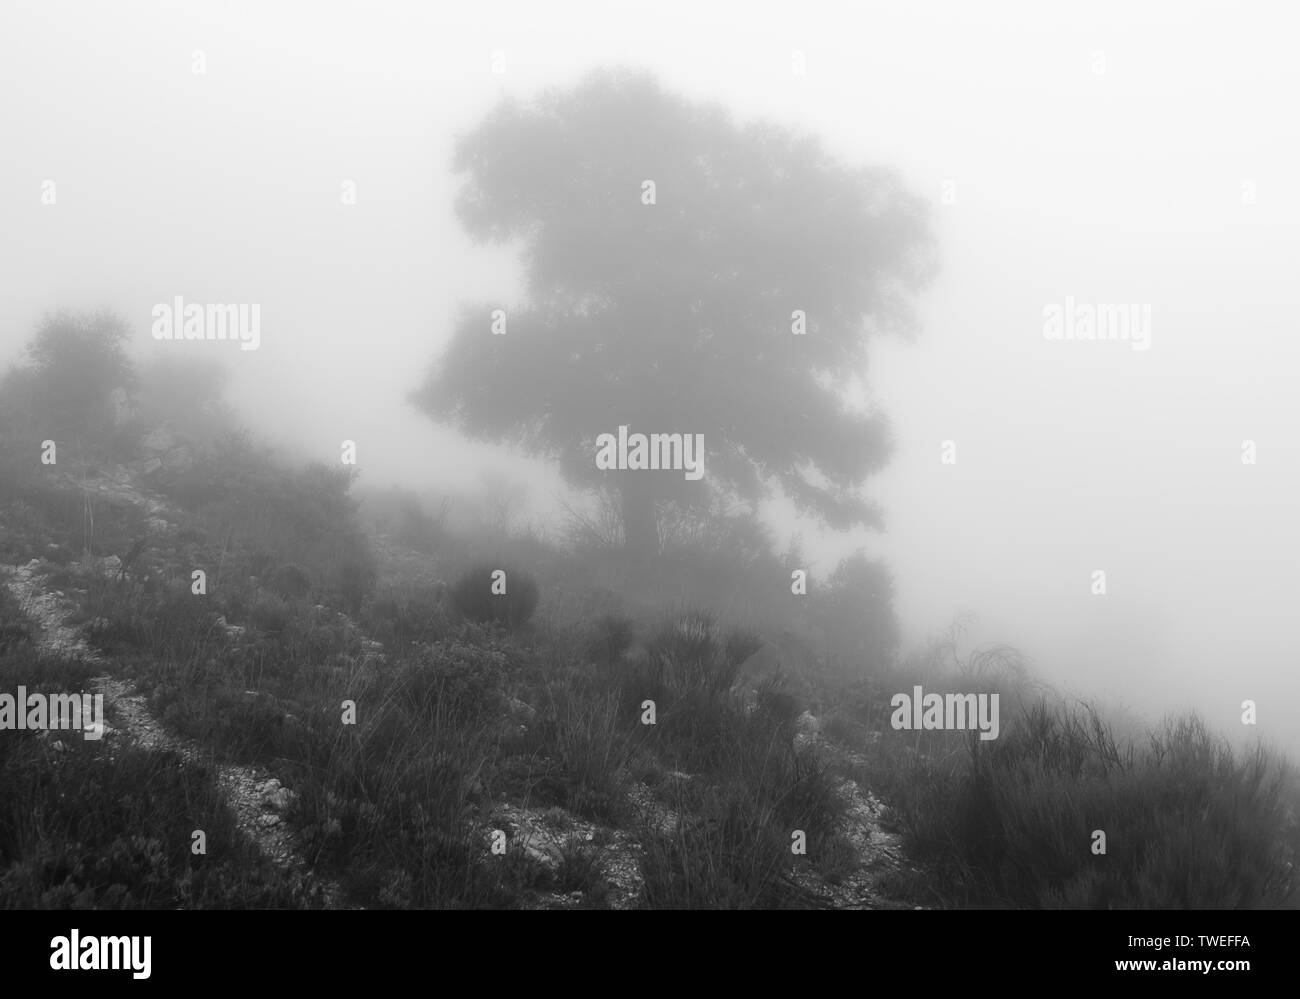 One big oak tree silhouette on a foggy hill. Stock Photo